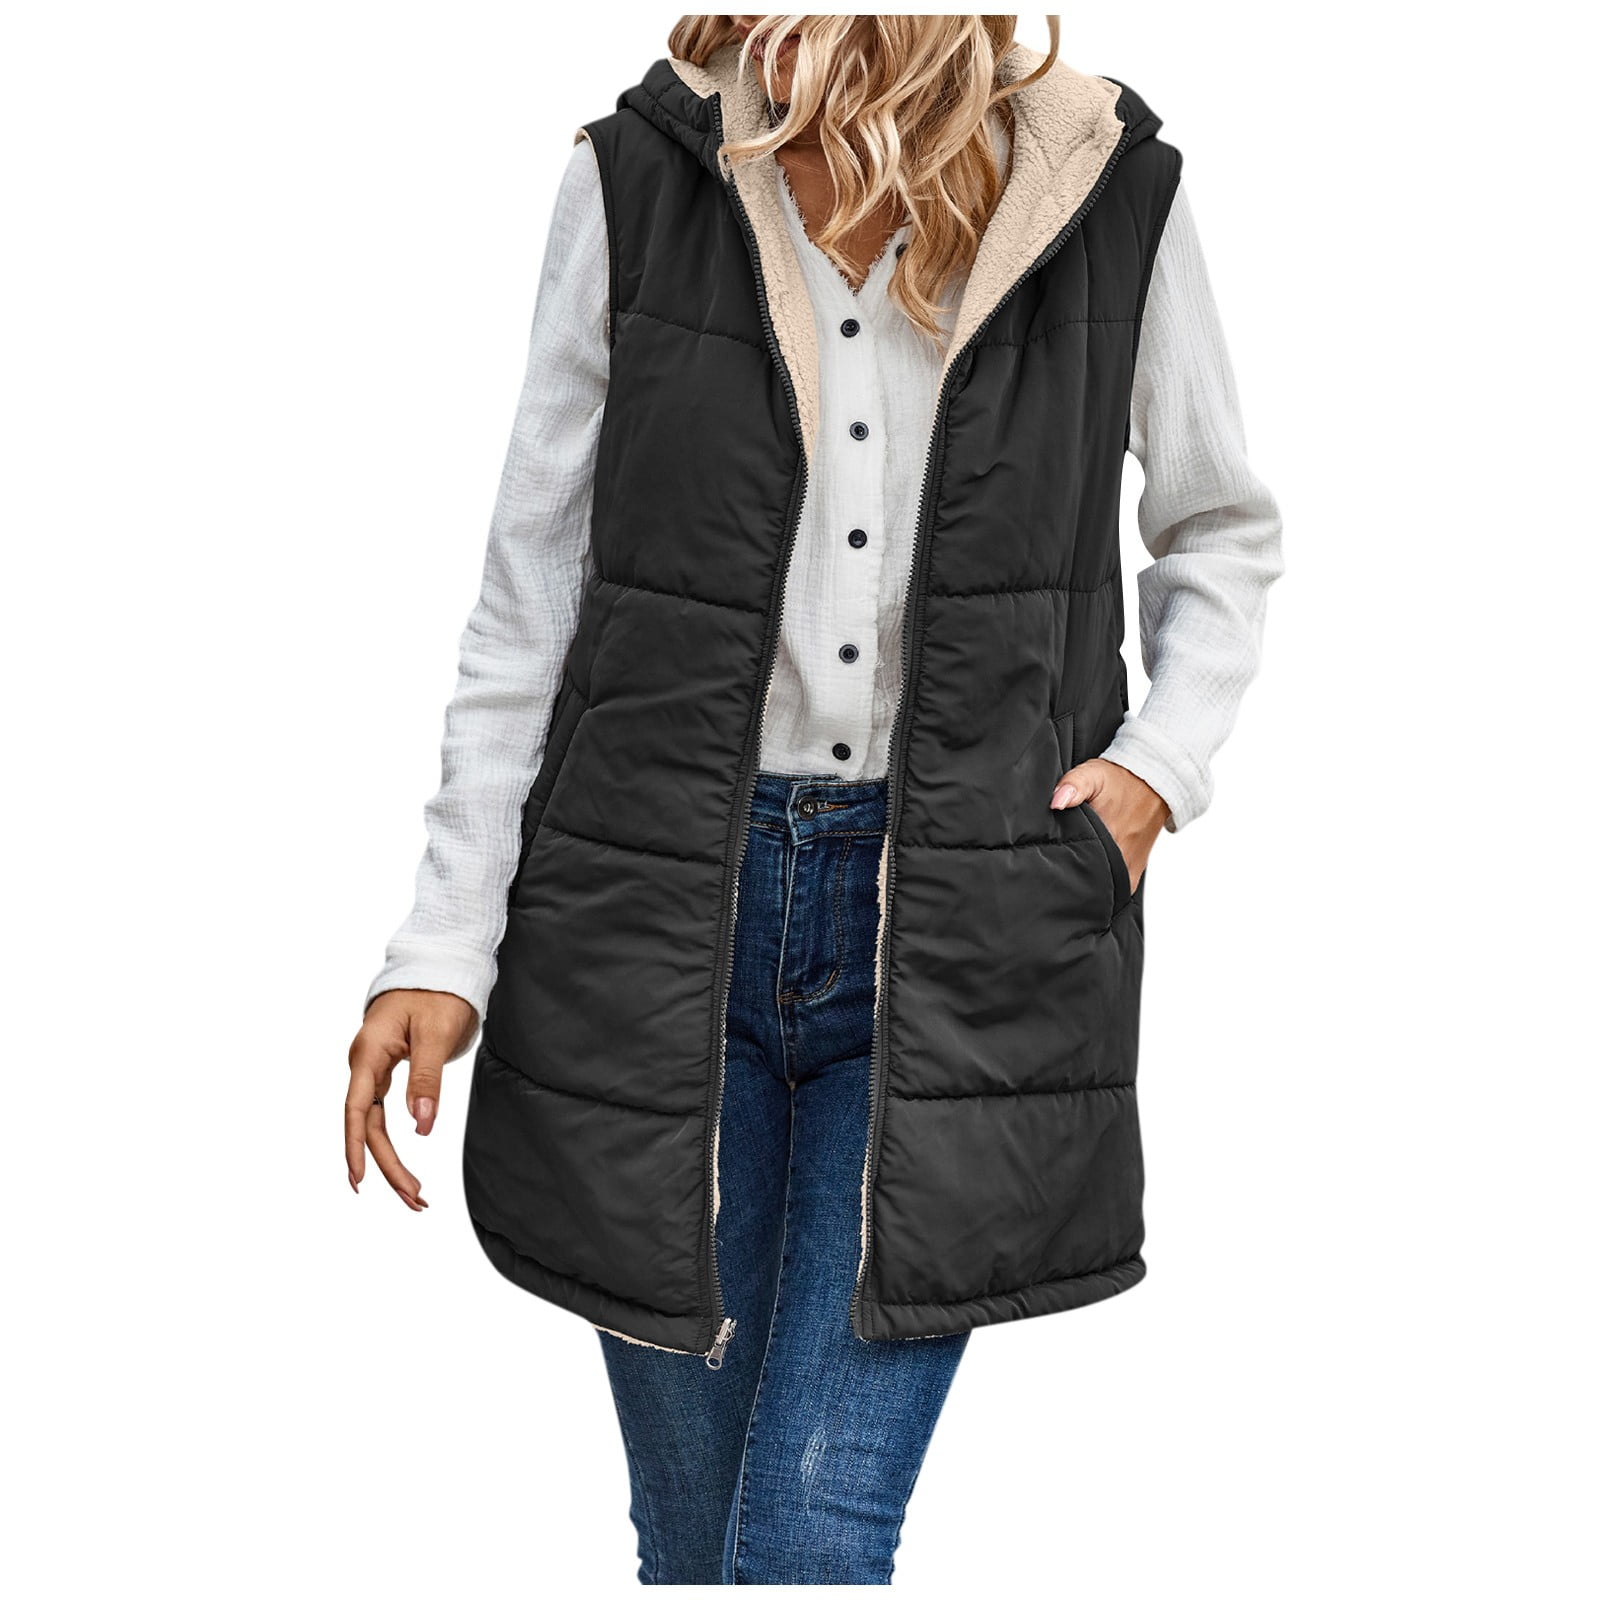 TQWQT Fall Reversible Vests for Women Sleeveless Fleece Jacket Zip